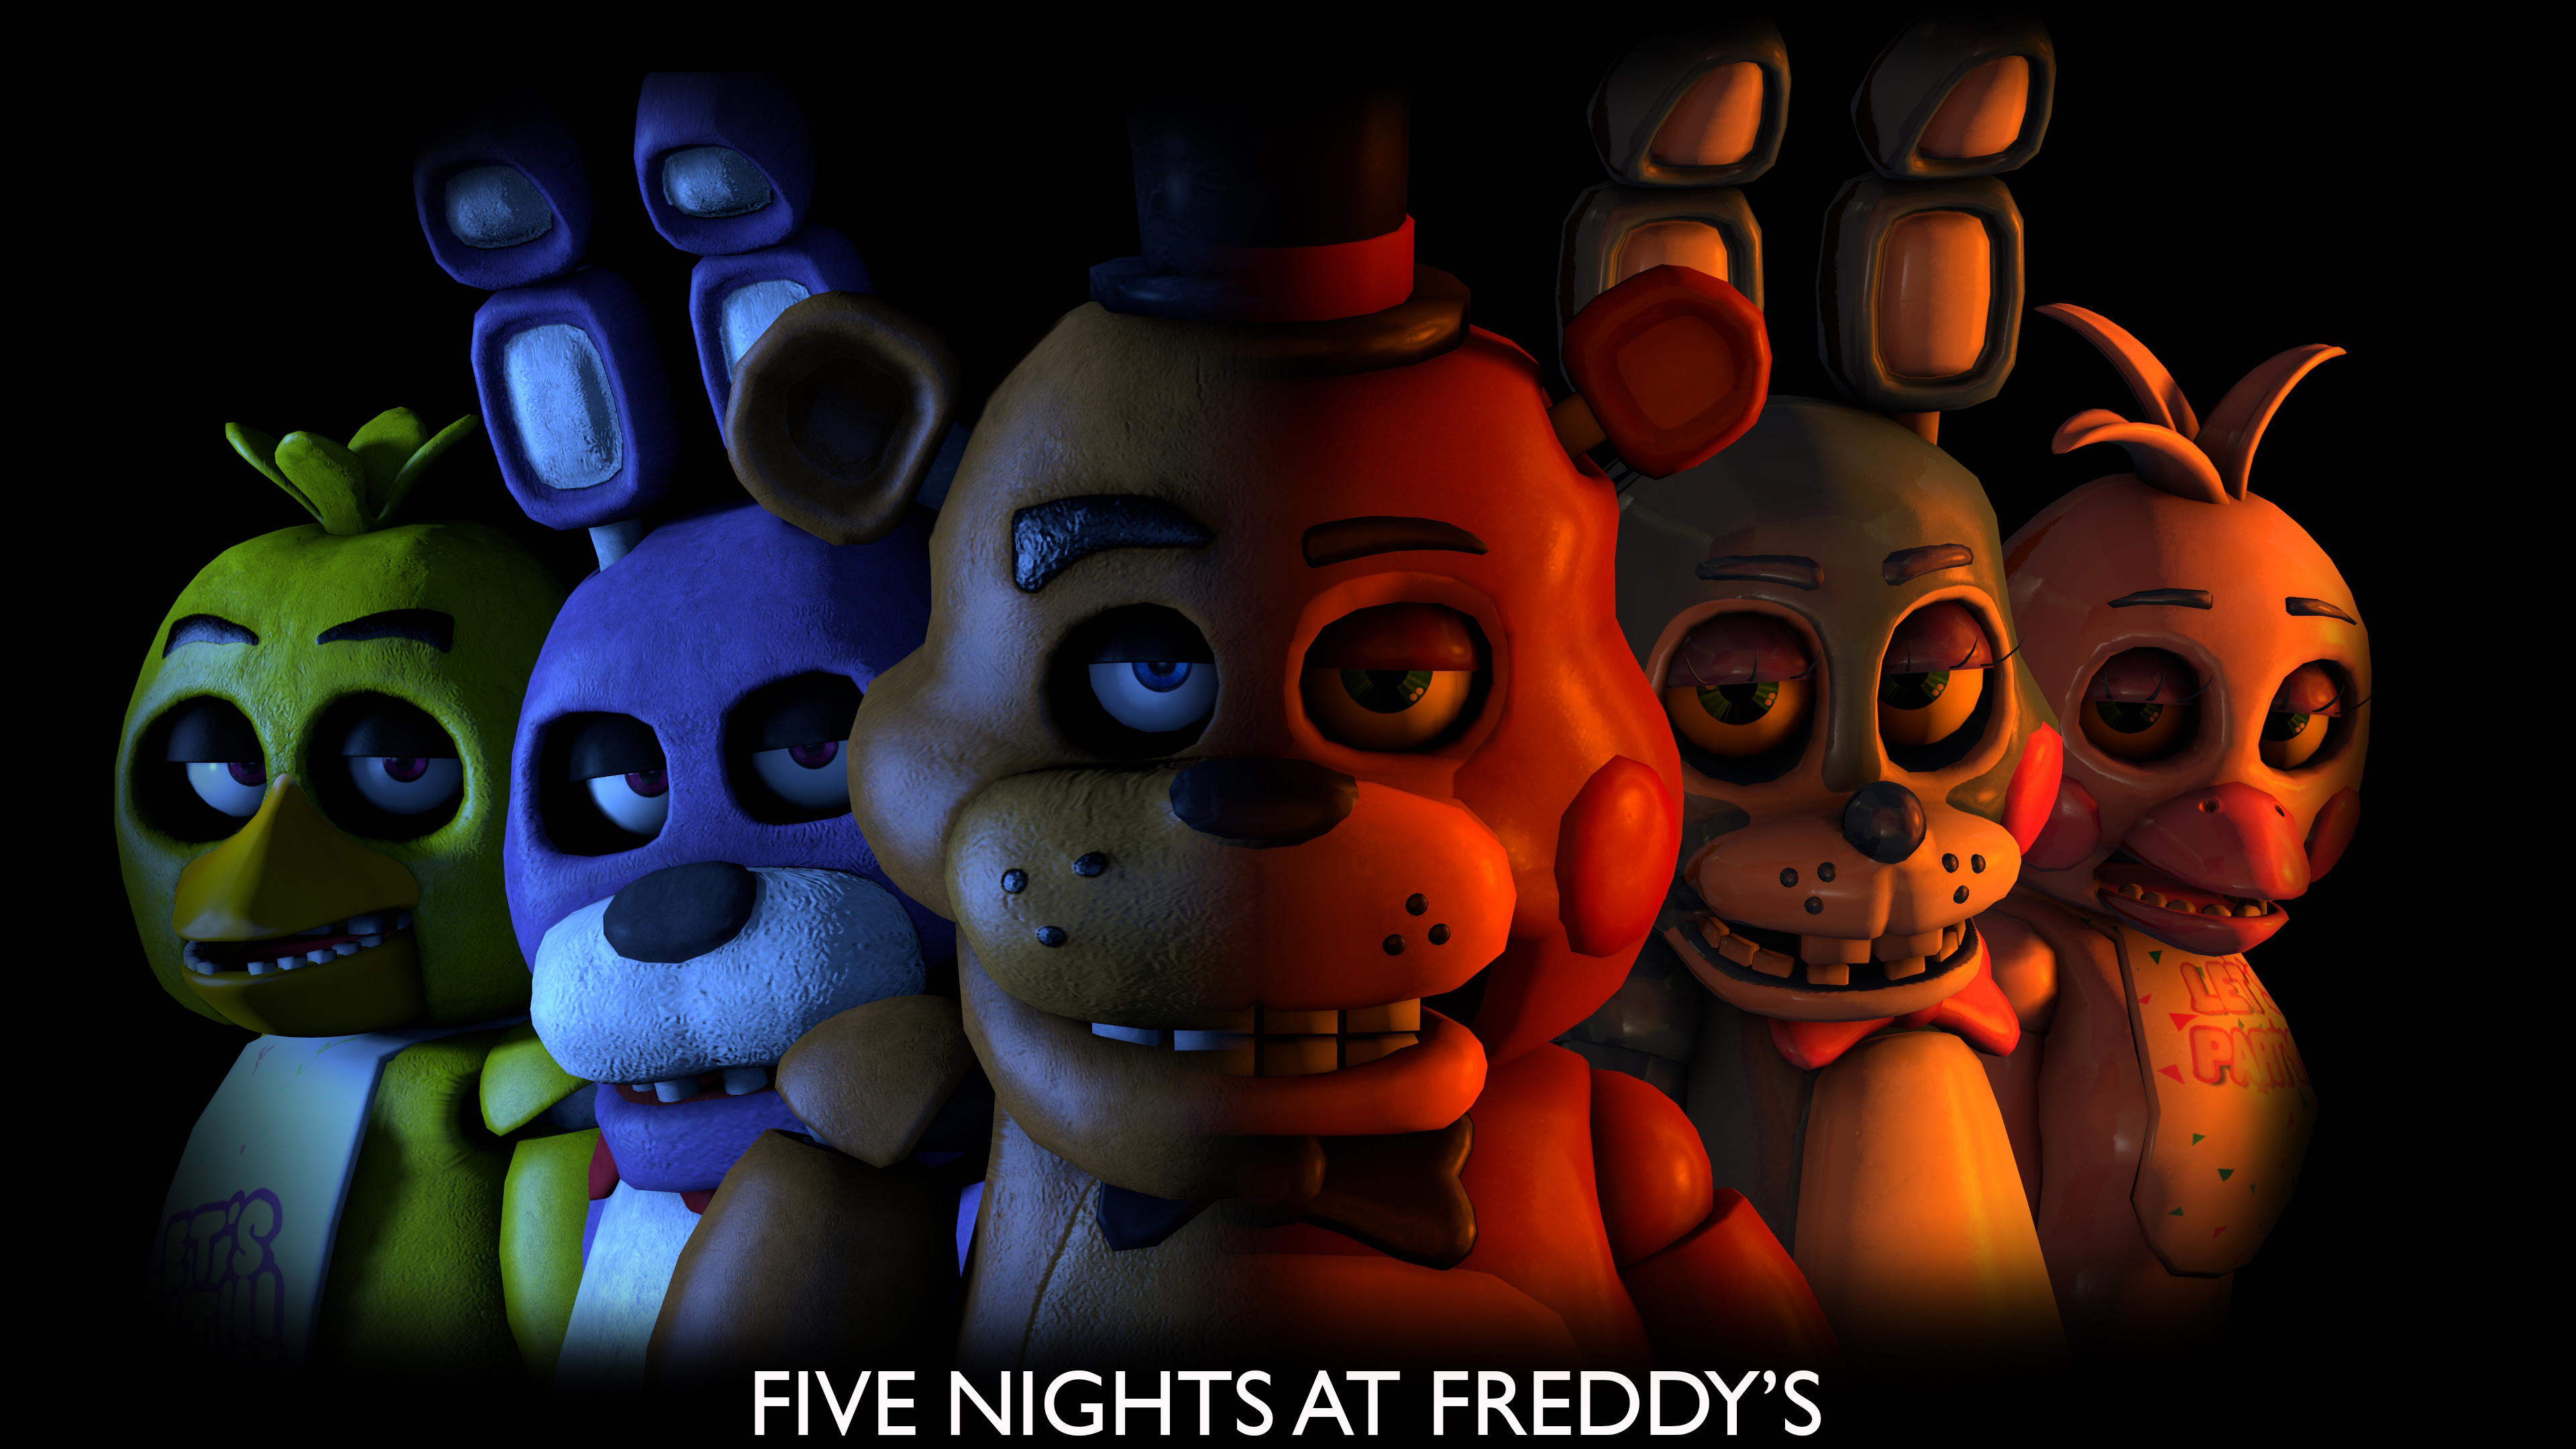 FNAF Five Nights at Freddys 2 Png Logo Red and Black (Instant Download) 